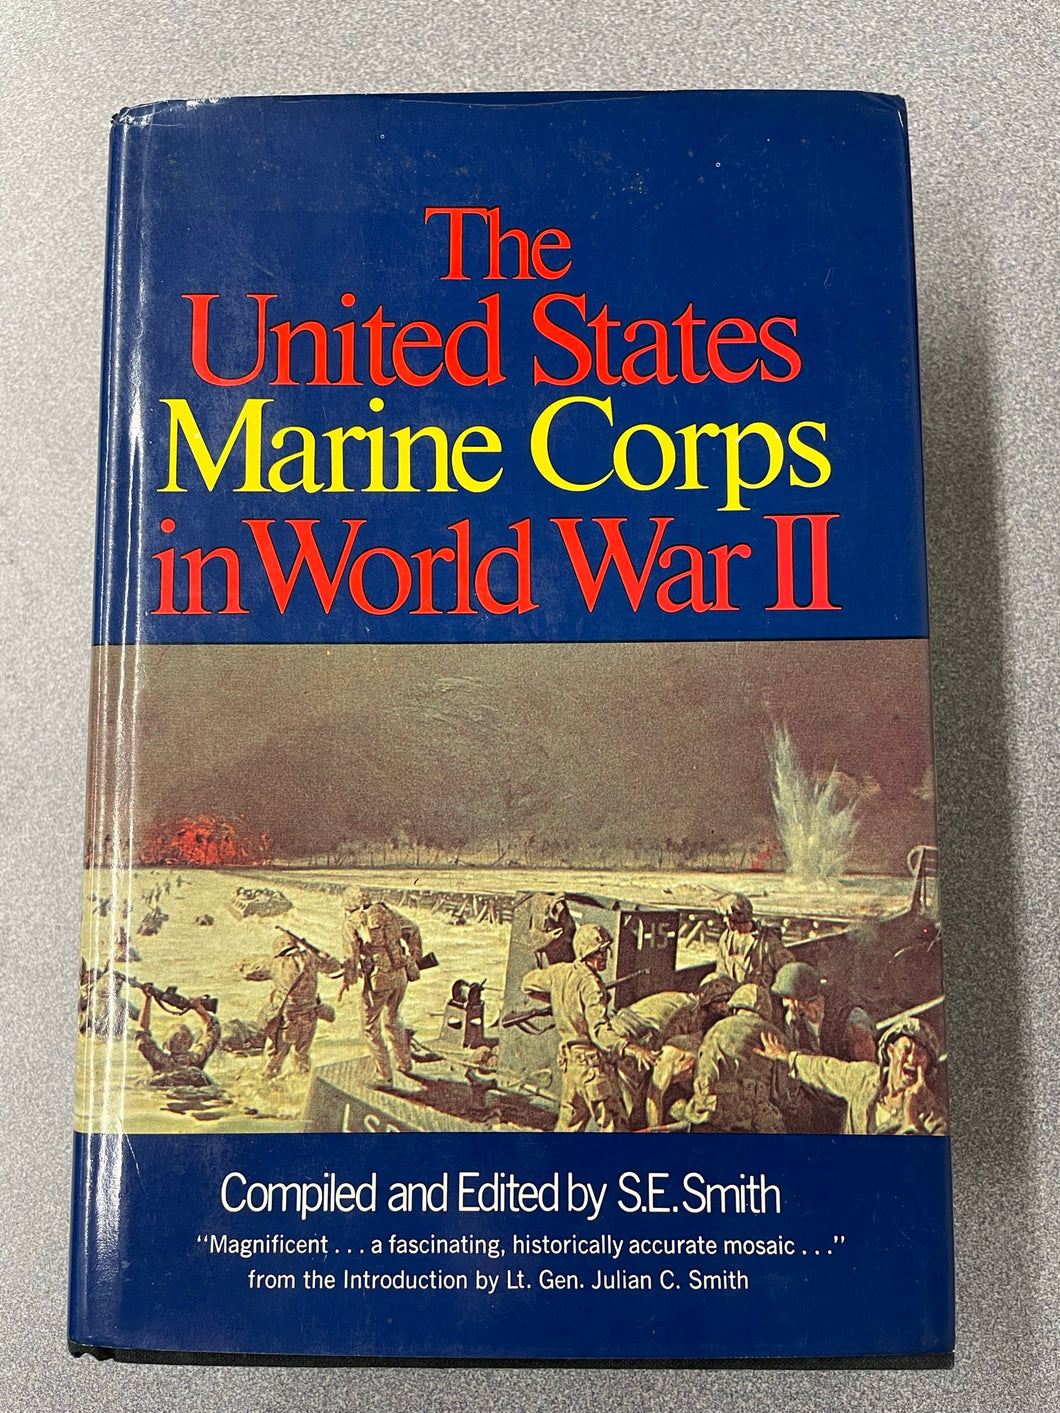 The United States Marine Corps in World War II, Smith, S. E. ed. [1969] ML 9/23